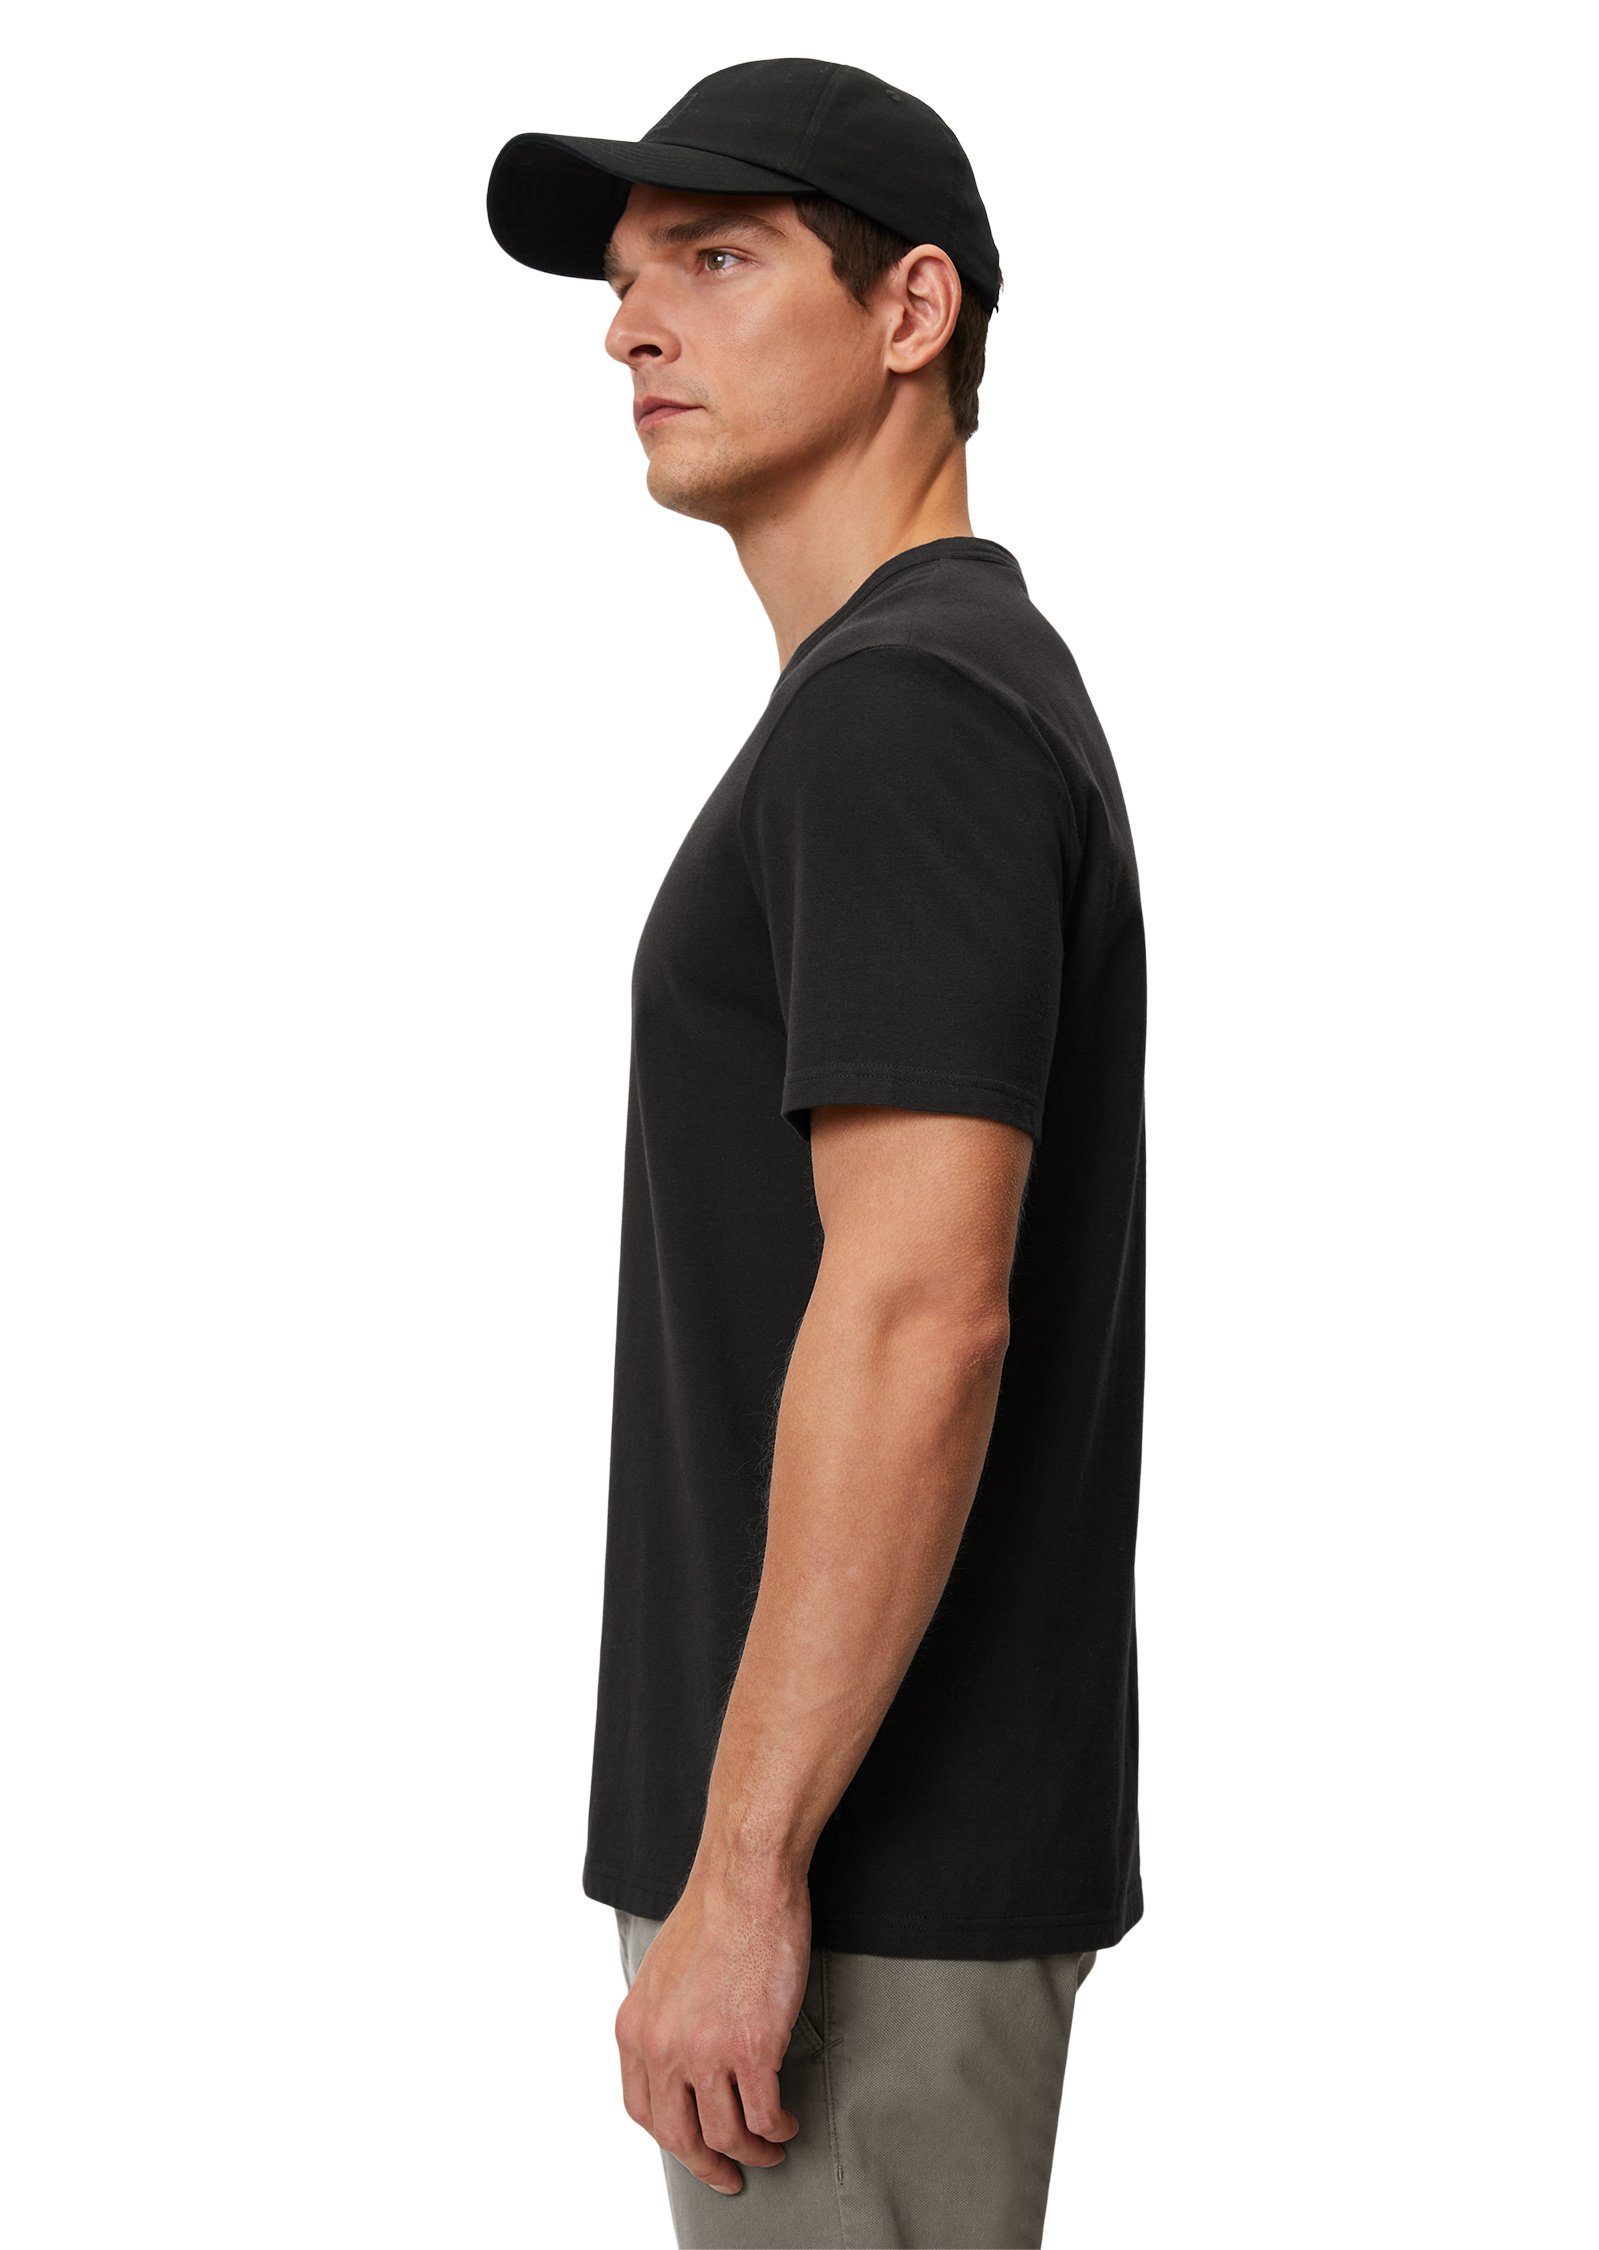 schwarz T-Shirt aus O'Polo Baumwolle hochwertiger Marc